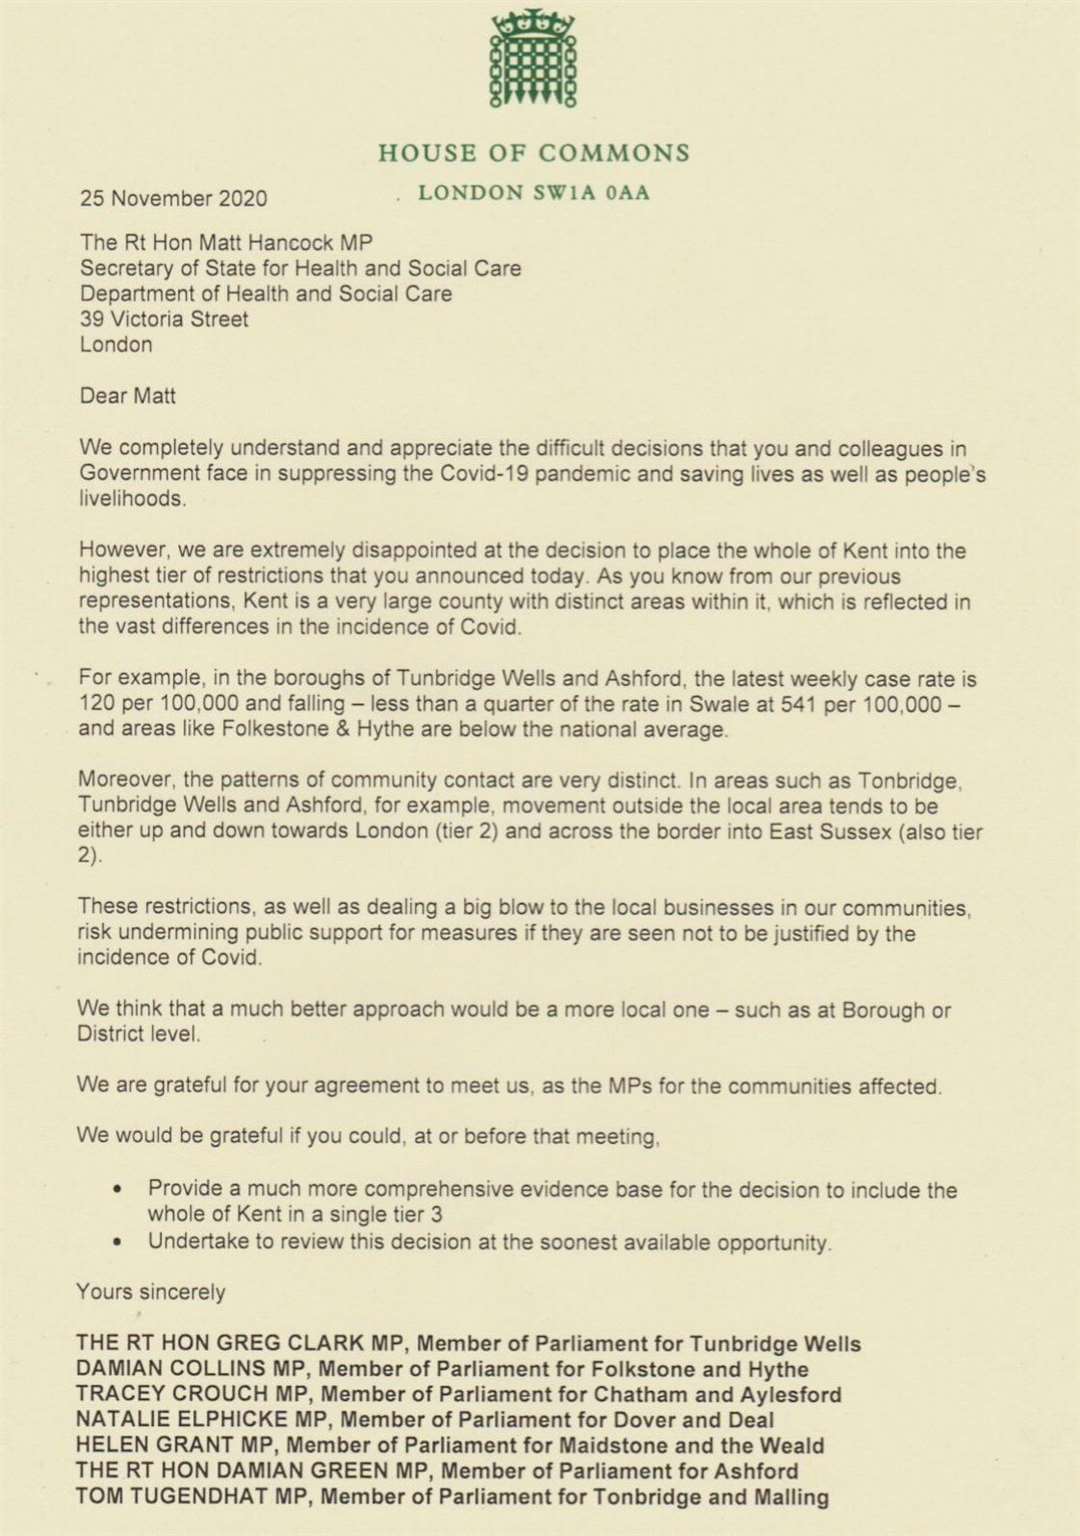 The letter Kent MPs sent to Matt Hancock